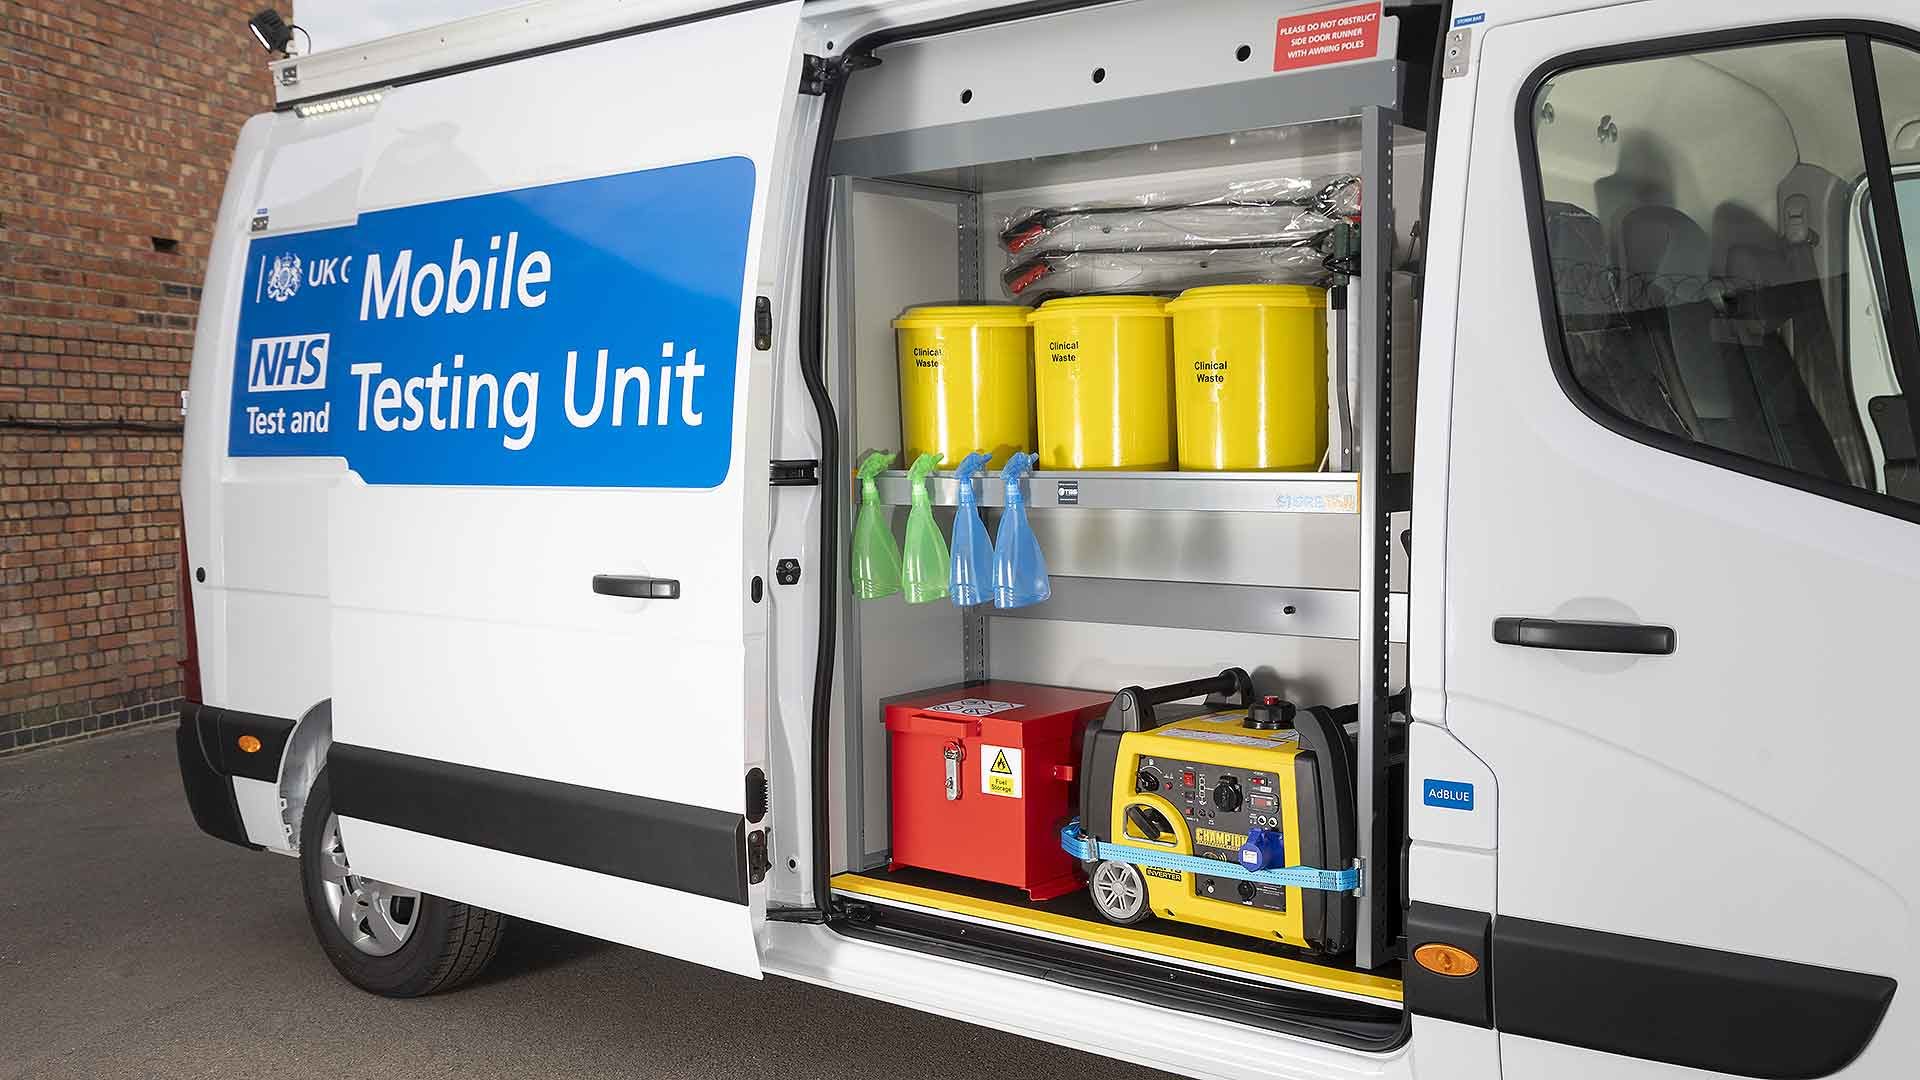 NHS Renault Covid mobile testing unit